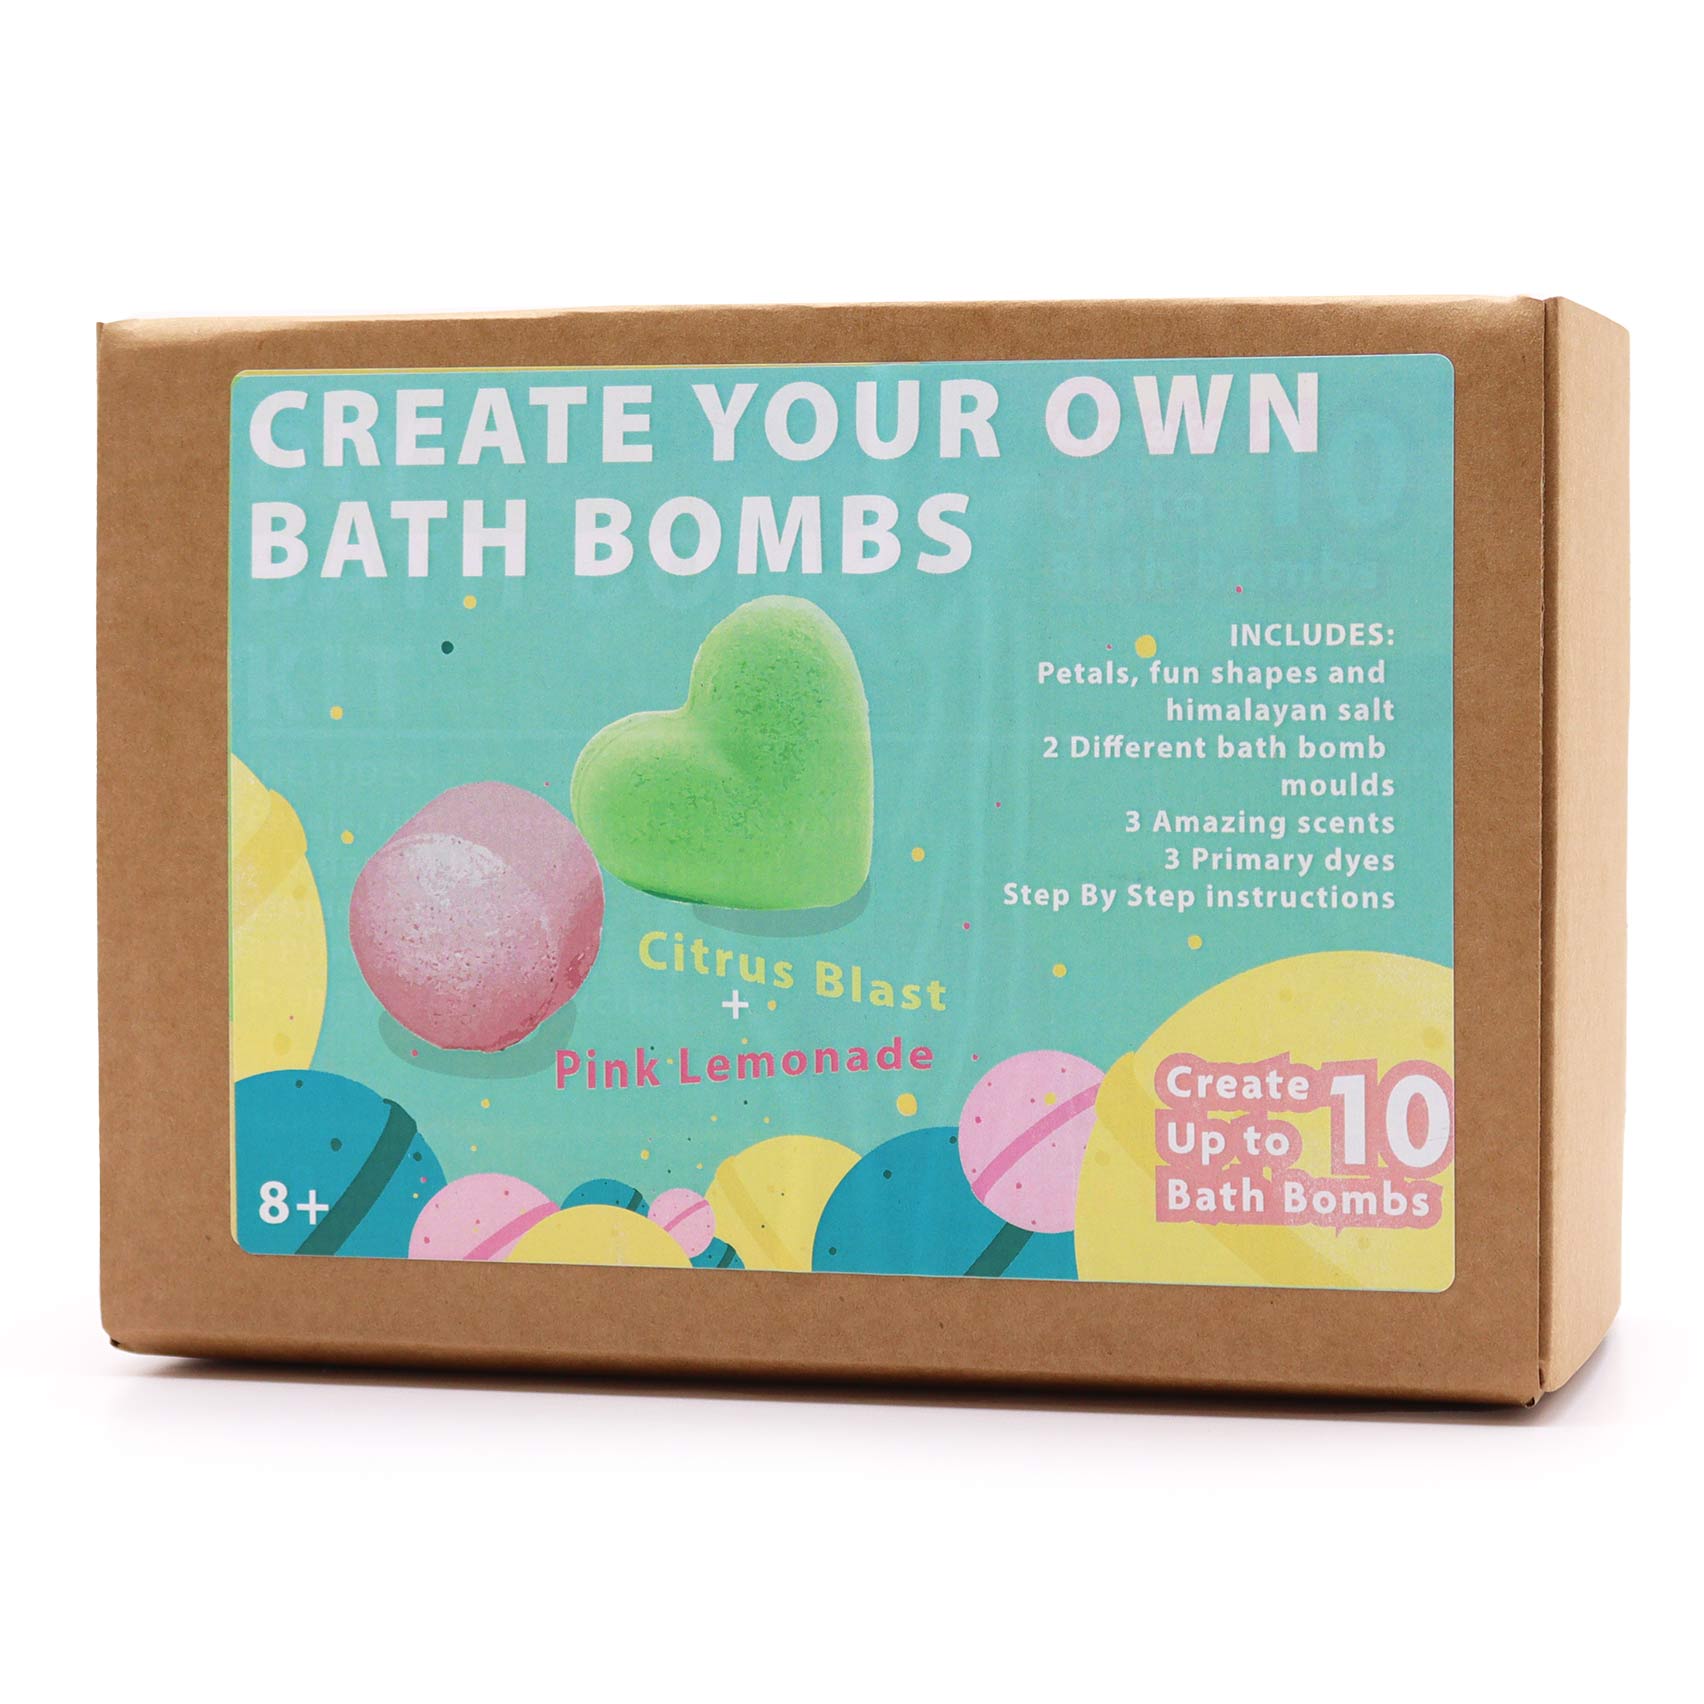 View Bath Bomb Kit Pink Lemonade Citrus Blast information